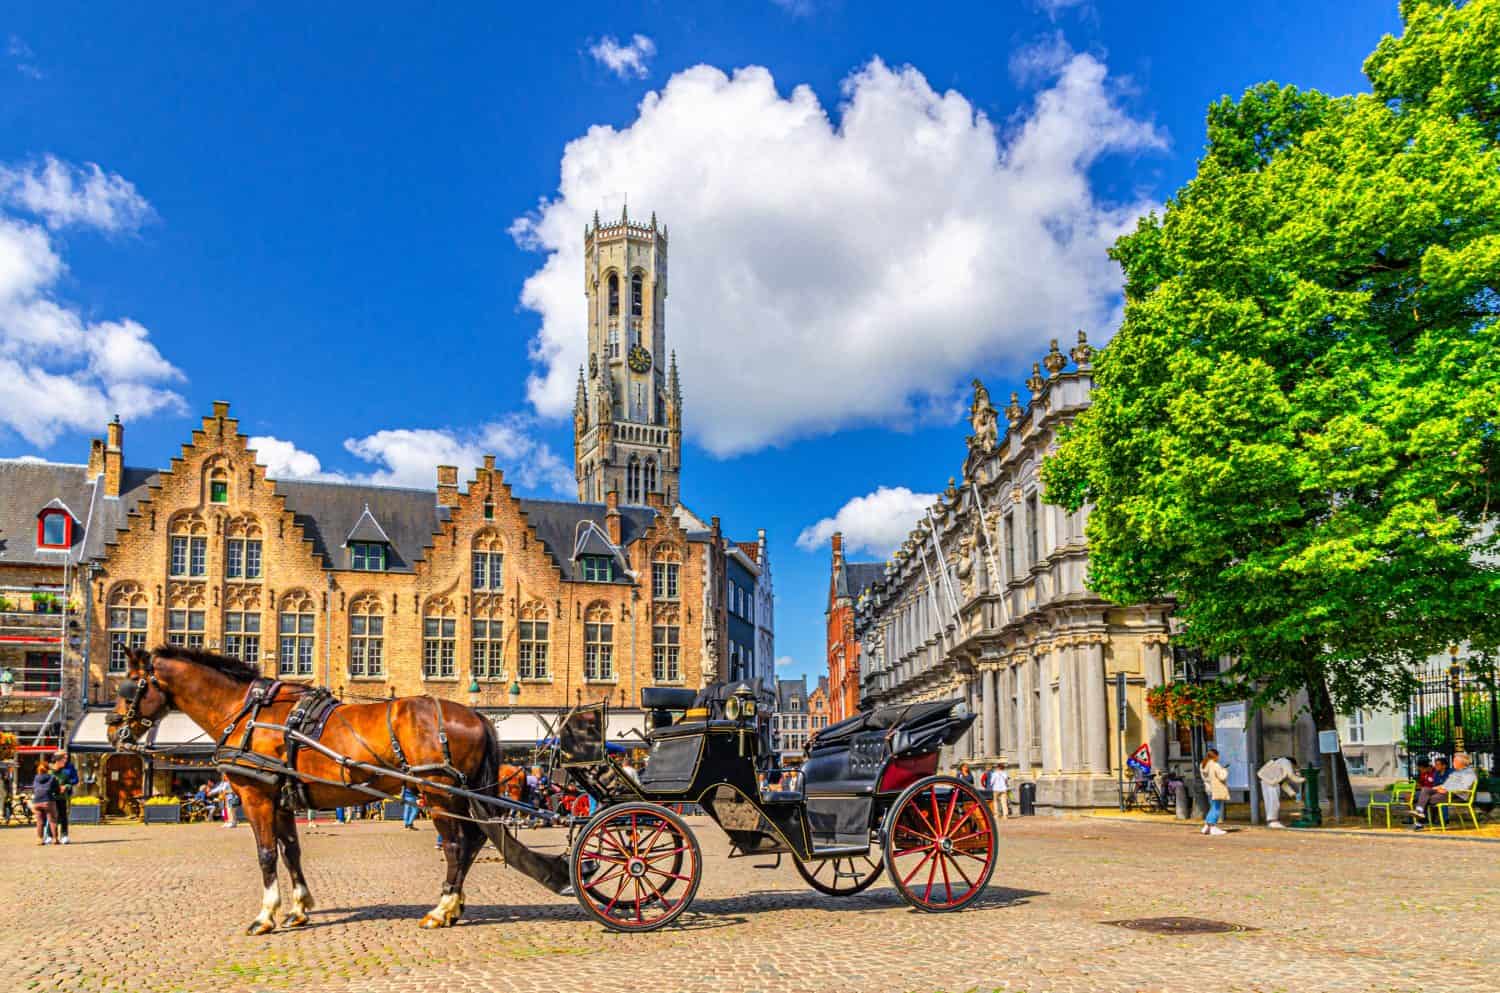 Horse-drawn carriage cart on cobblestone Burg square, medieval buildings and Belfry of Bruges Belfort van Brugge bell tower in Brugge old town, Bruges city historical centre, Flemish Region, Belgium